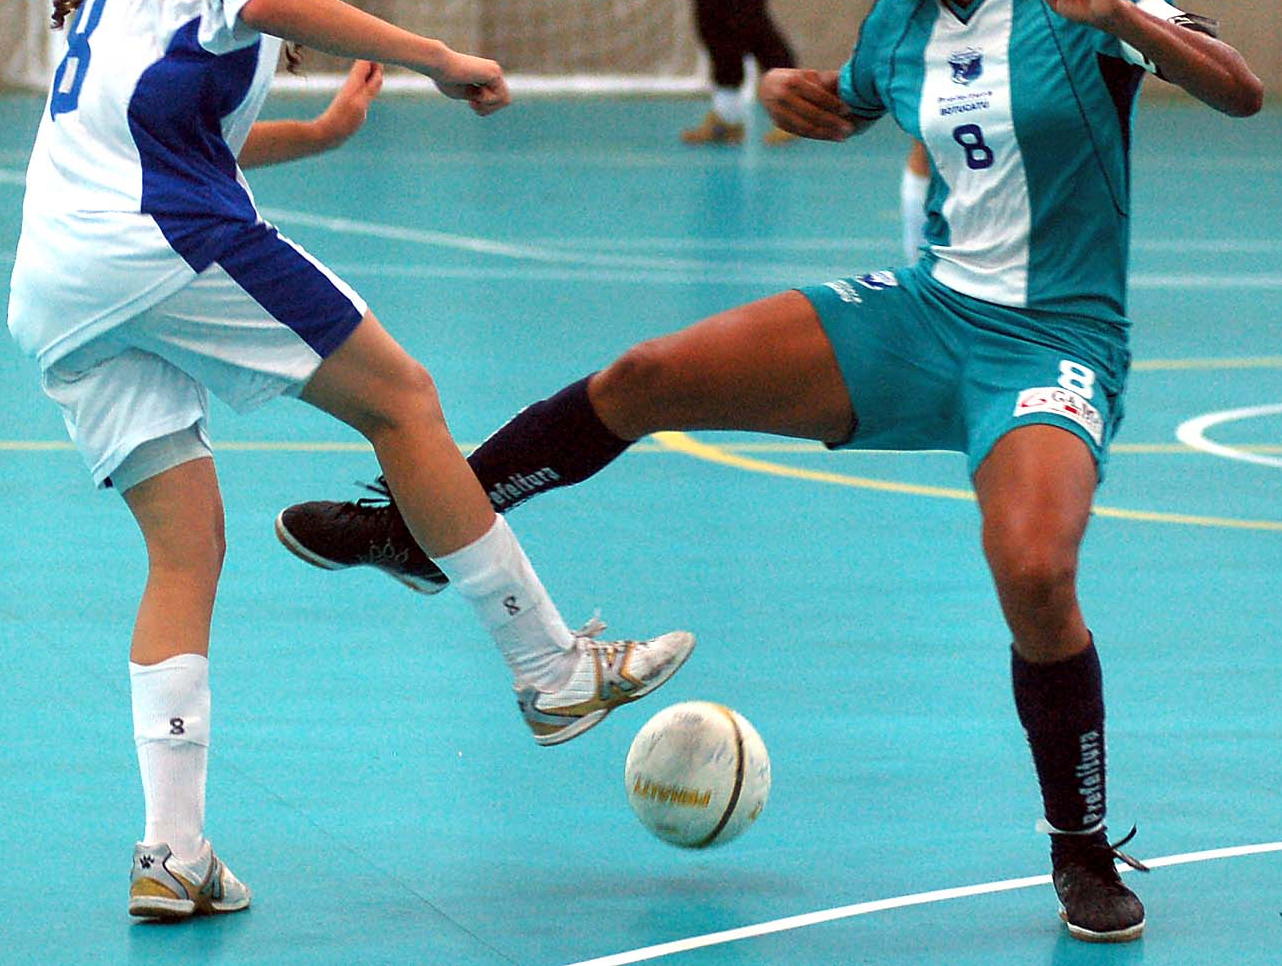 Sub-17 de Futsal Feminino em jogo treino.